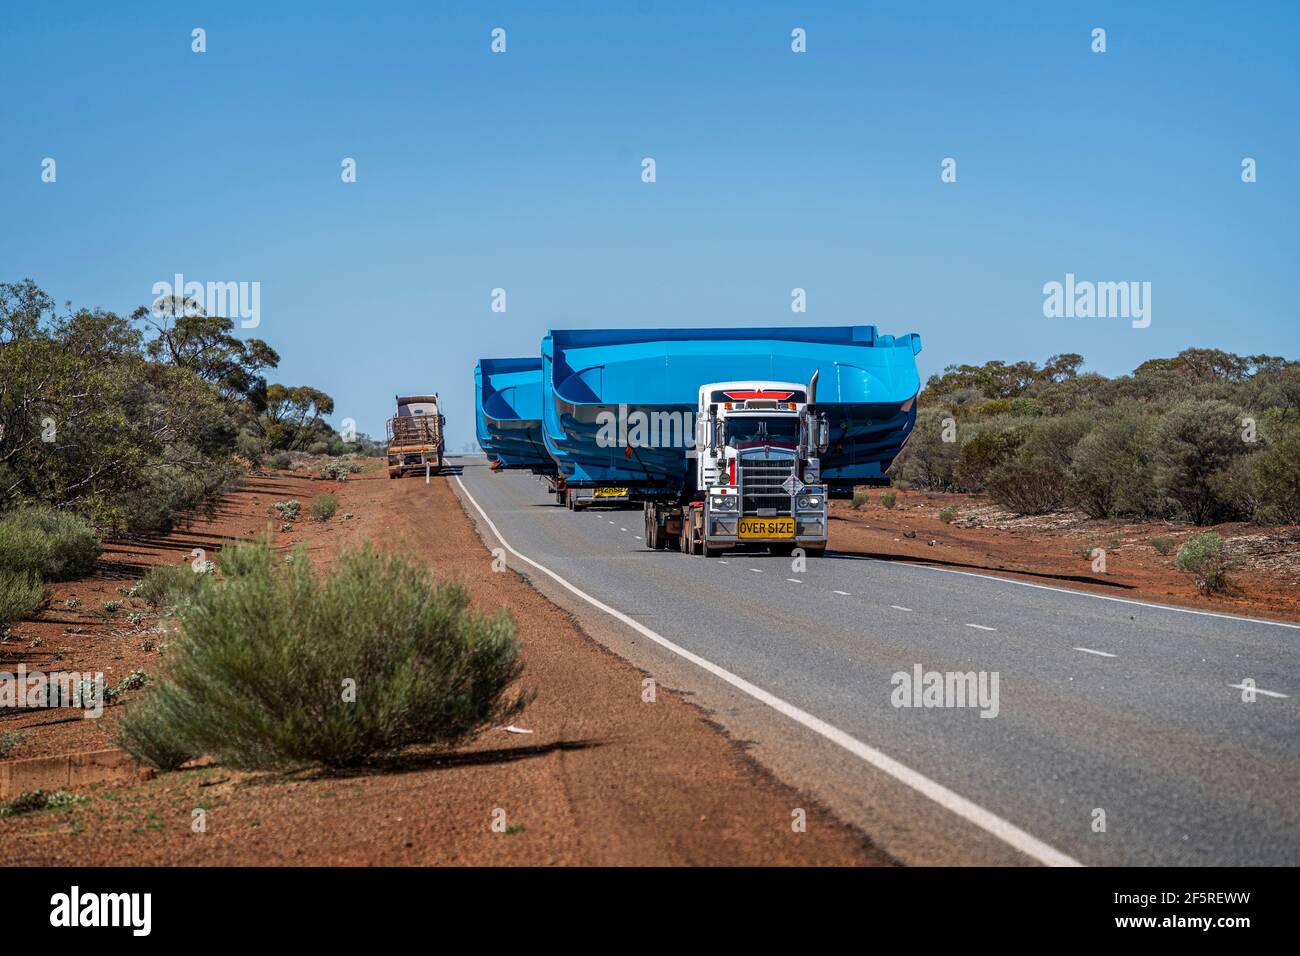 Heavy mine machinery being transported by road train trucks, Western Australia Stock Photo